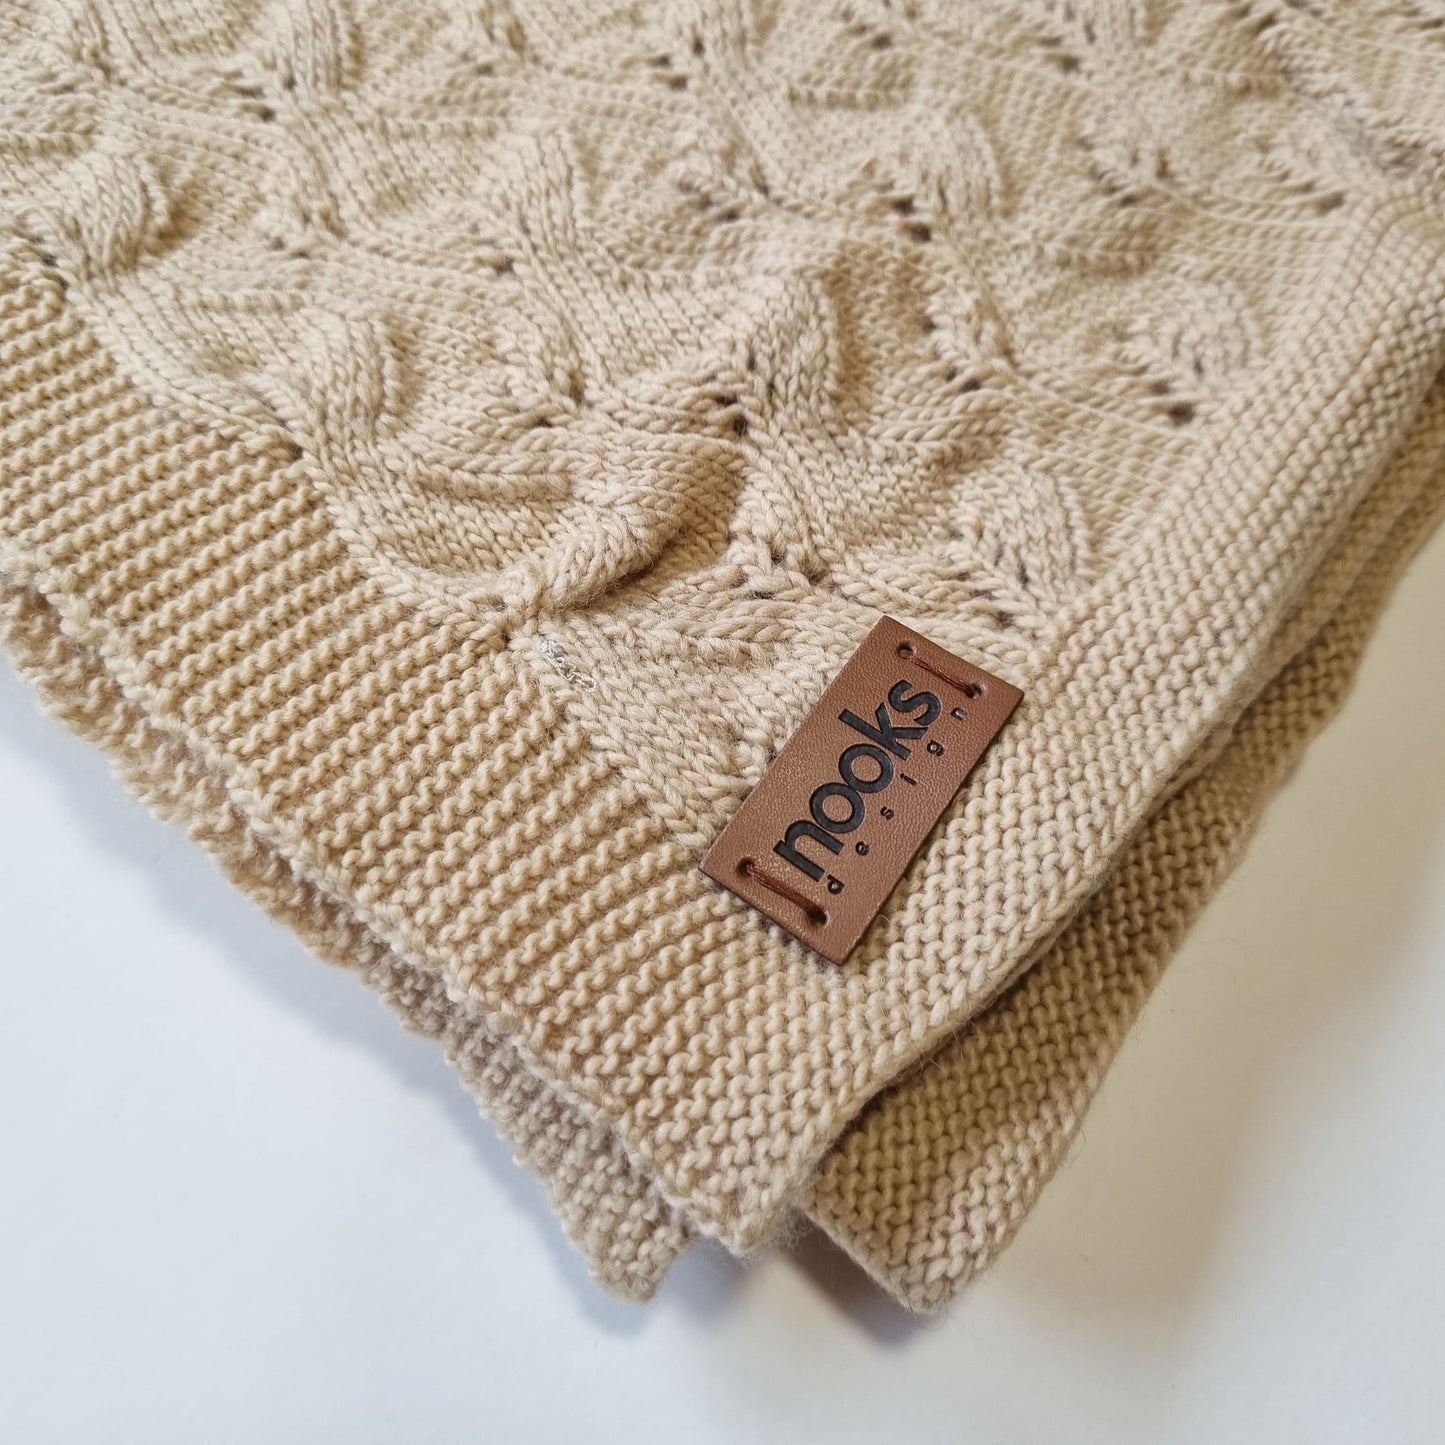 Nooks Merino Wool Baby Blanket - Caramel Latte